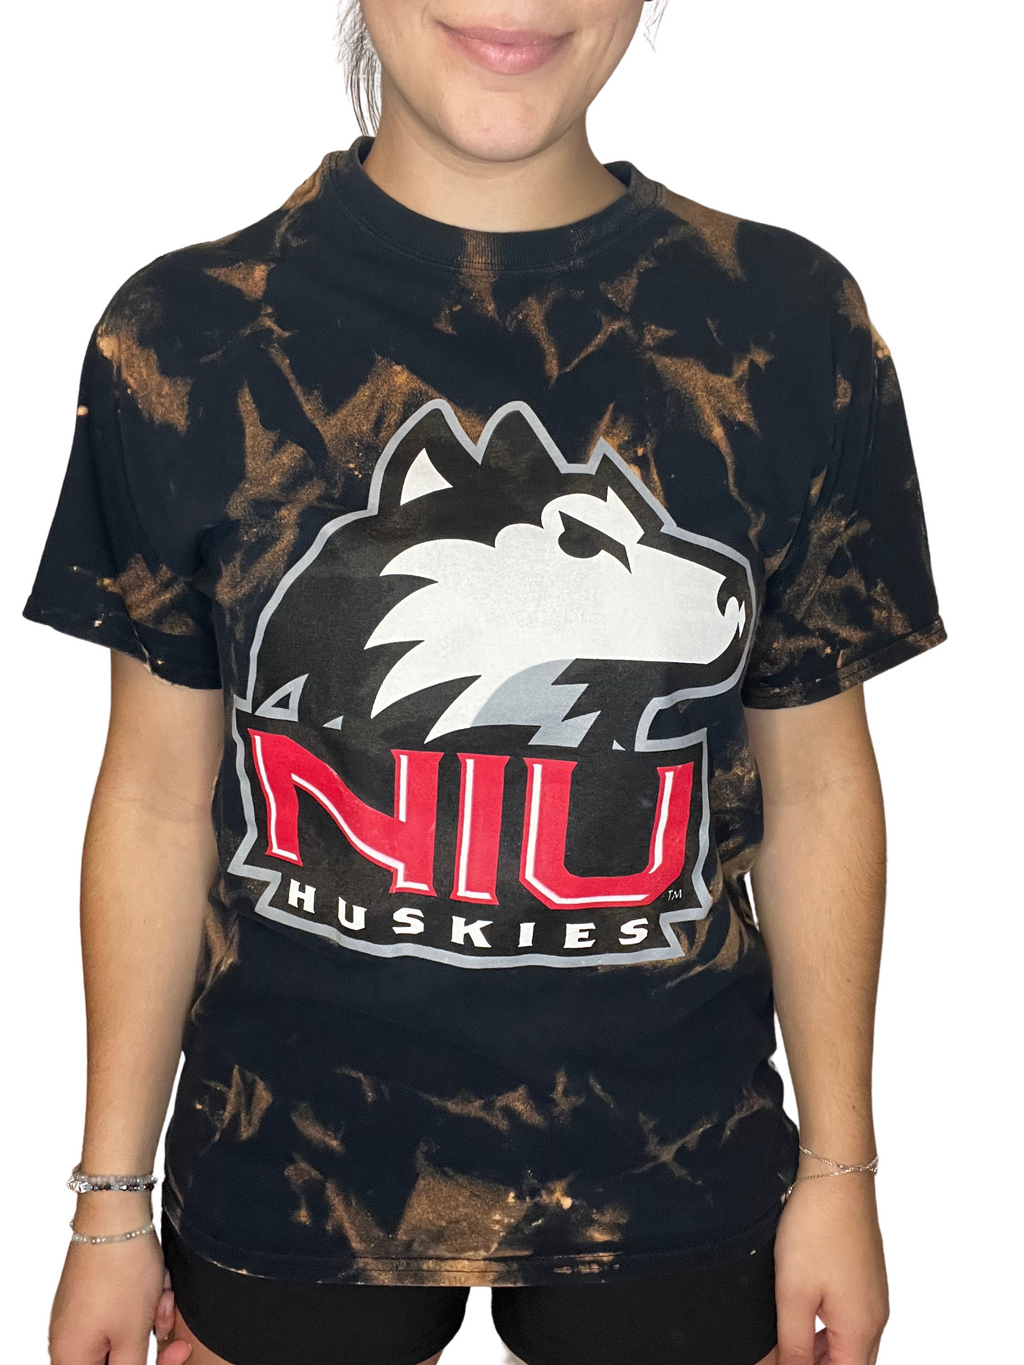 Northern Illinois University Bleached Shirt